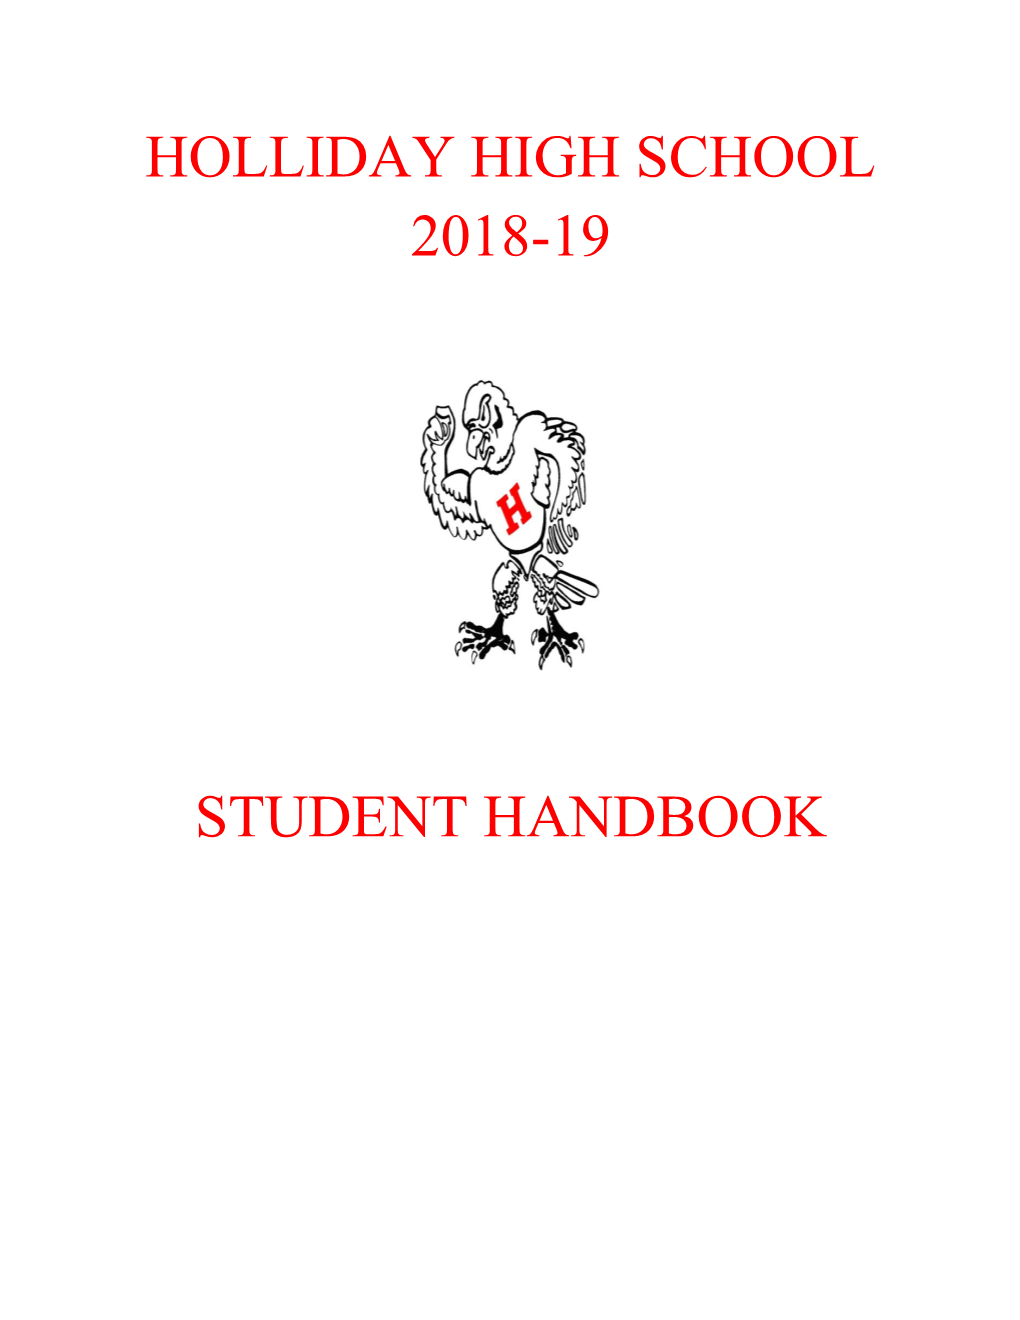 Holliday High School 2018-19 Student Handbook